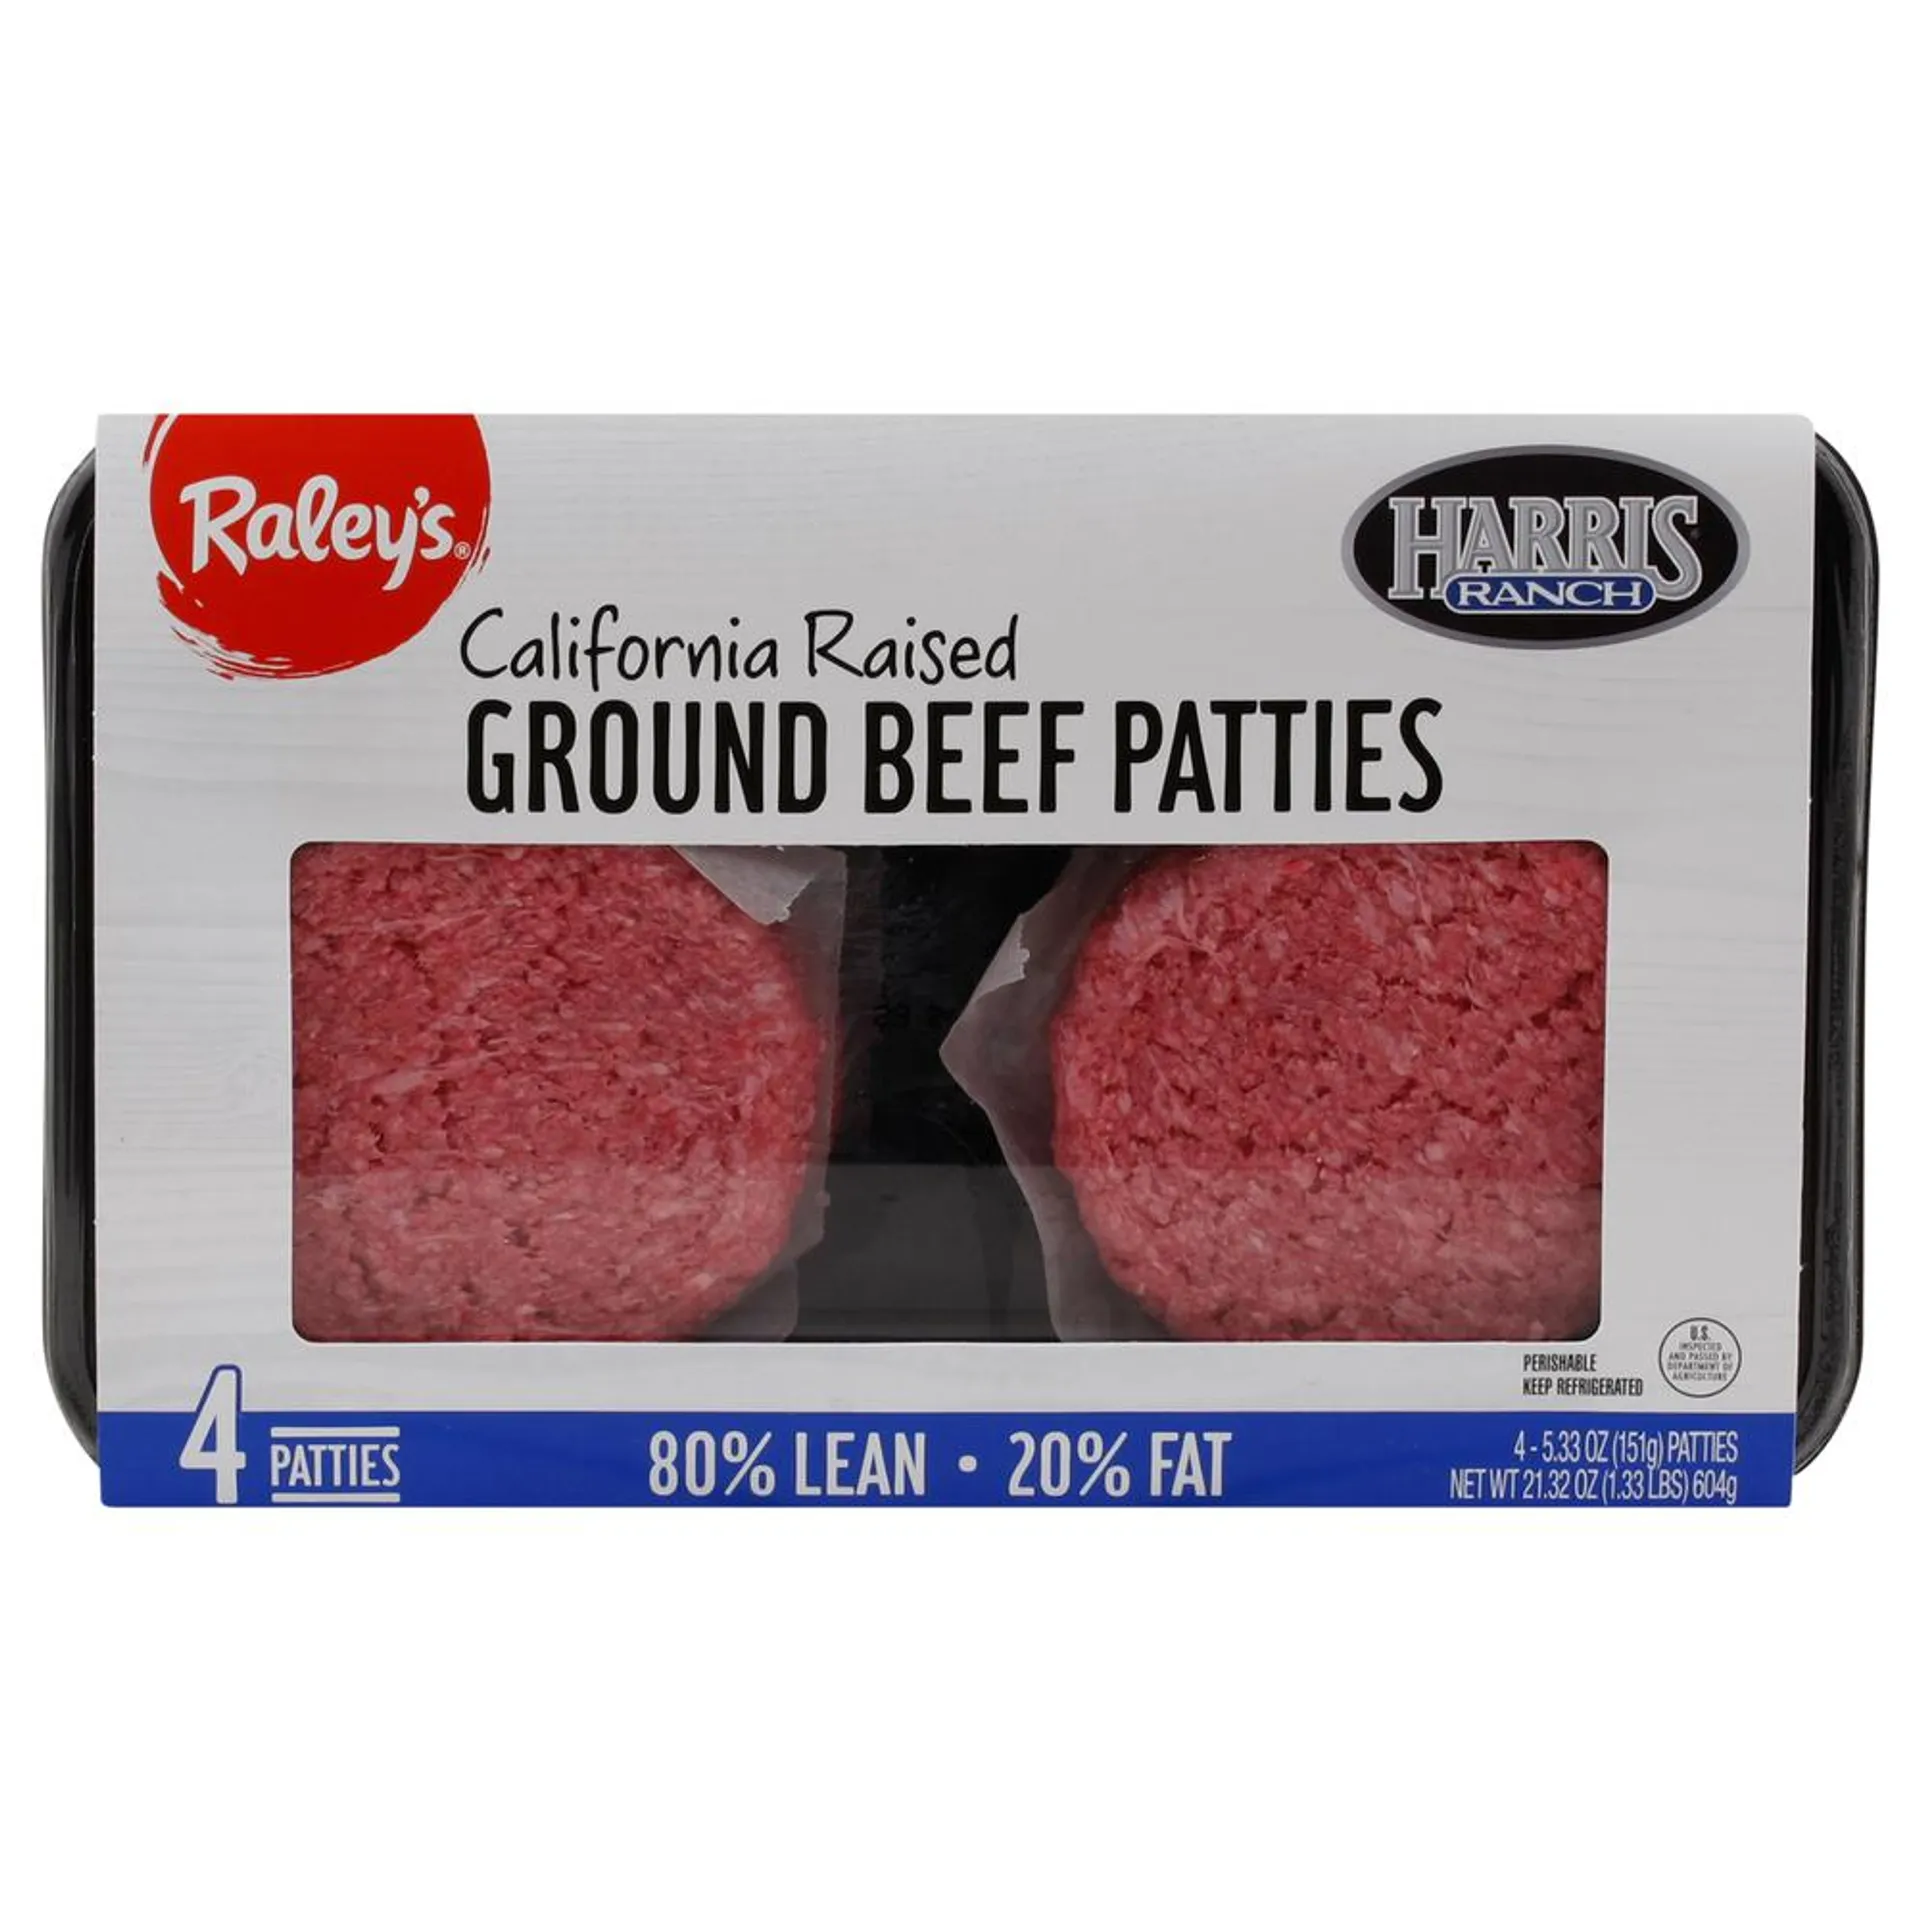 Raley's Beef Patties, Ground, California Raised